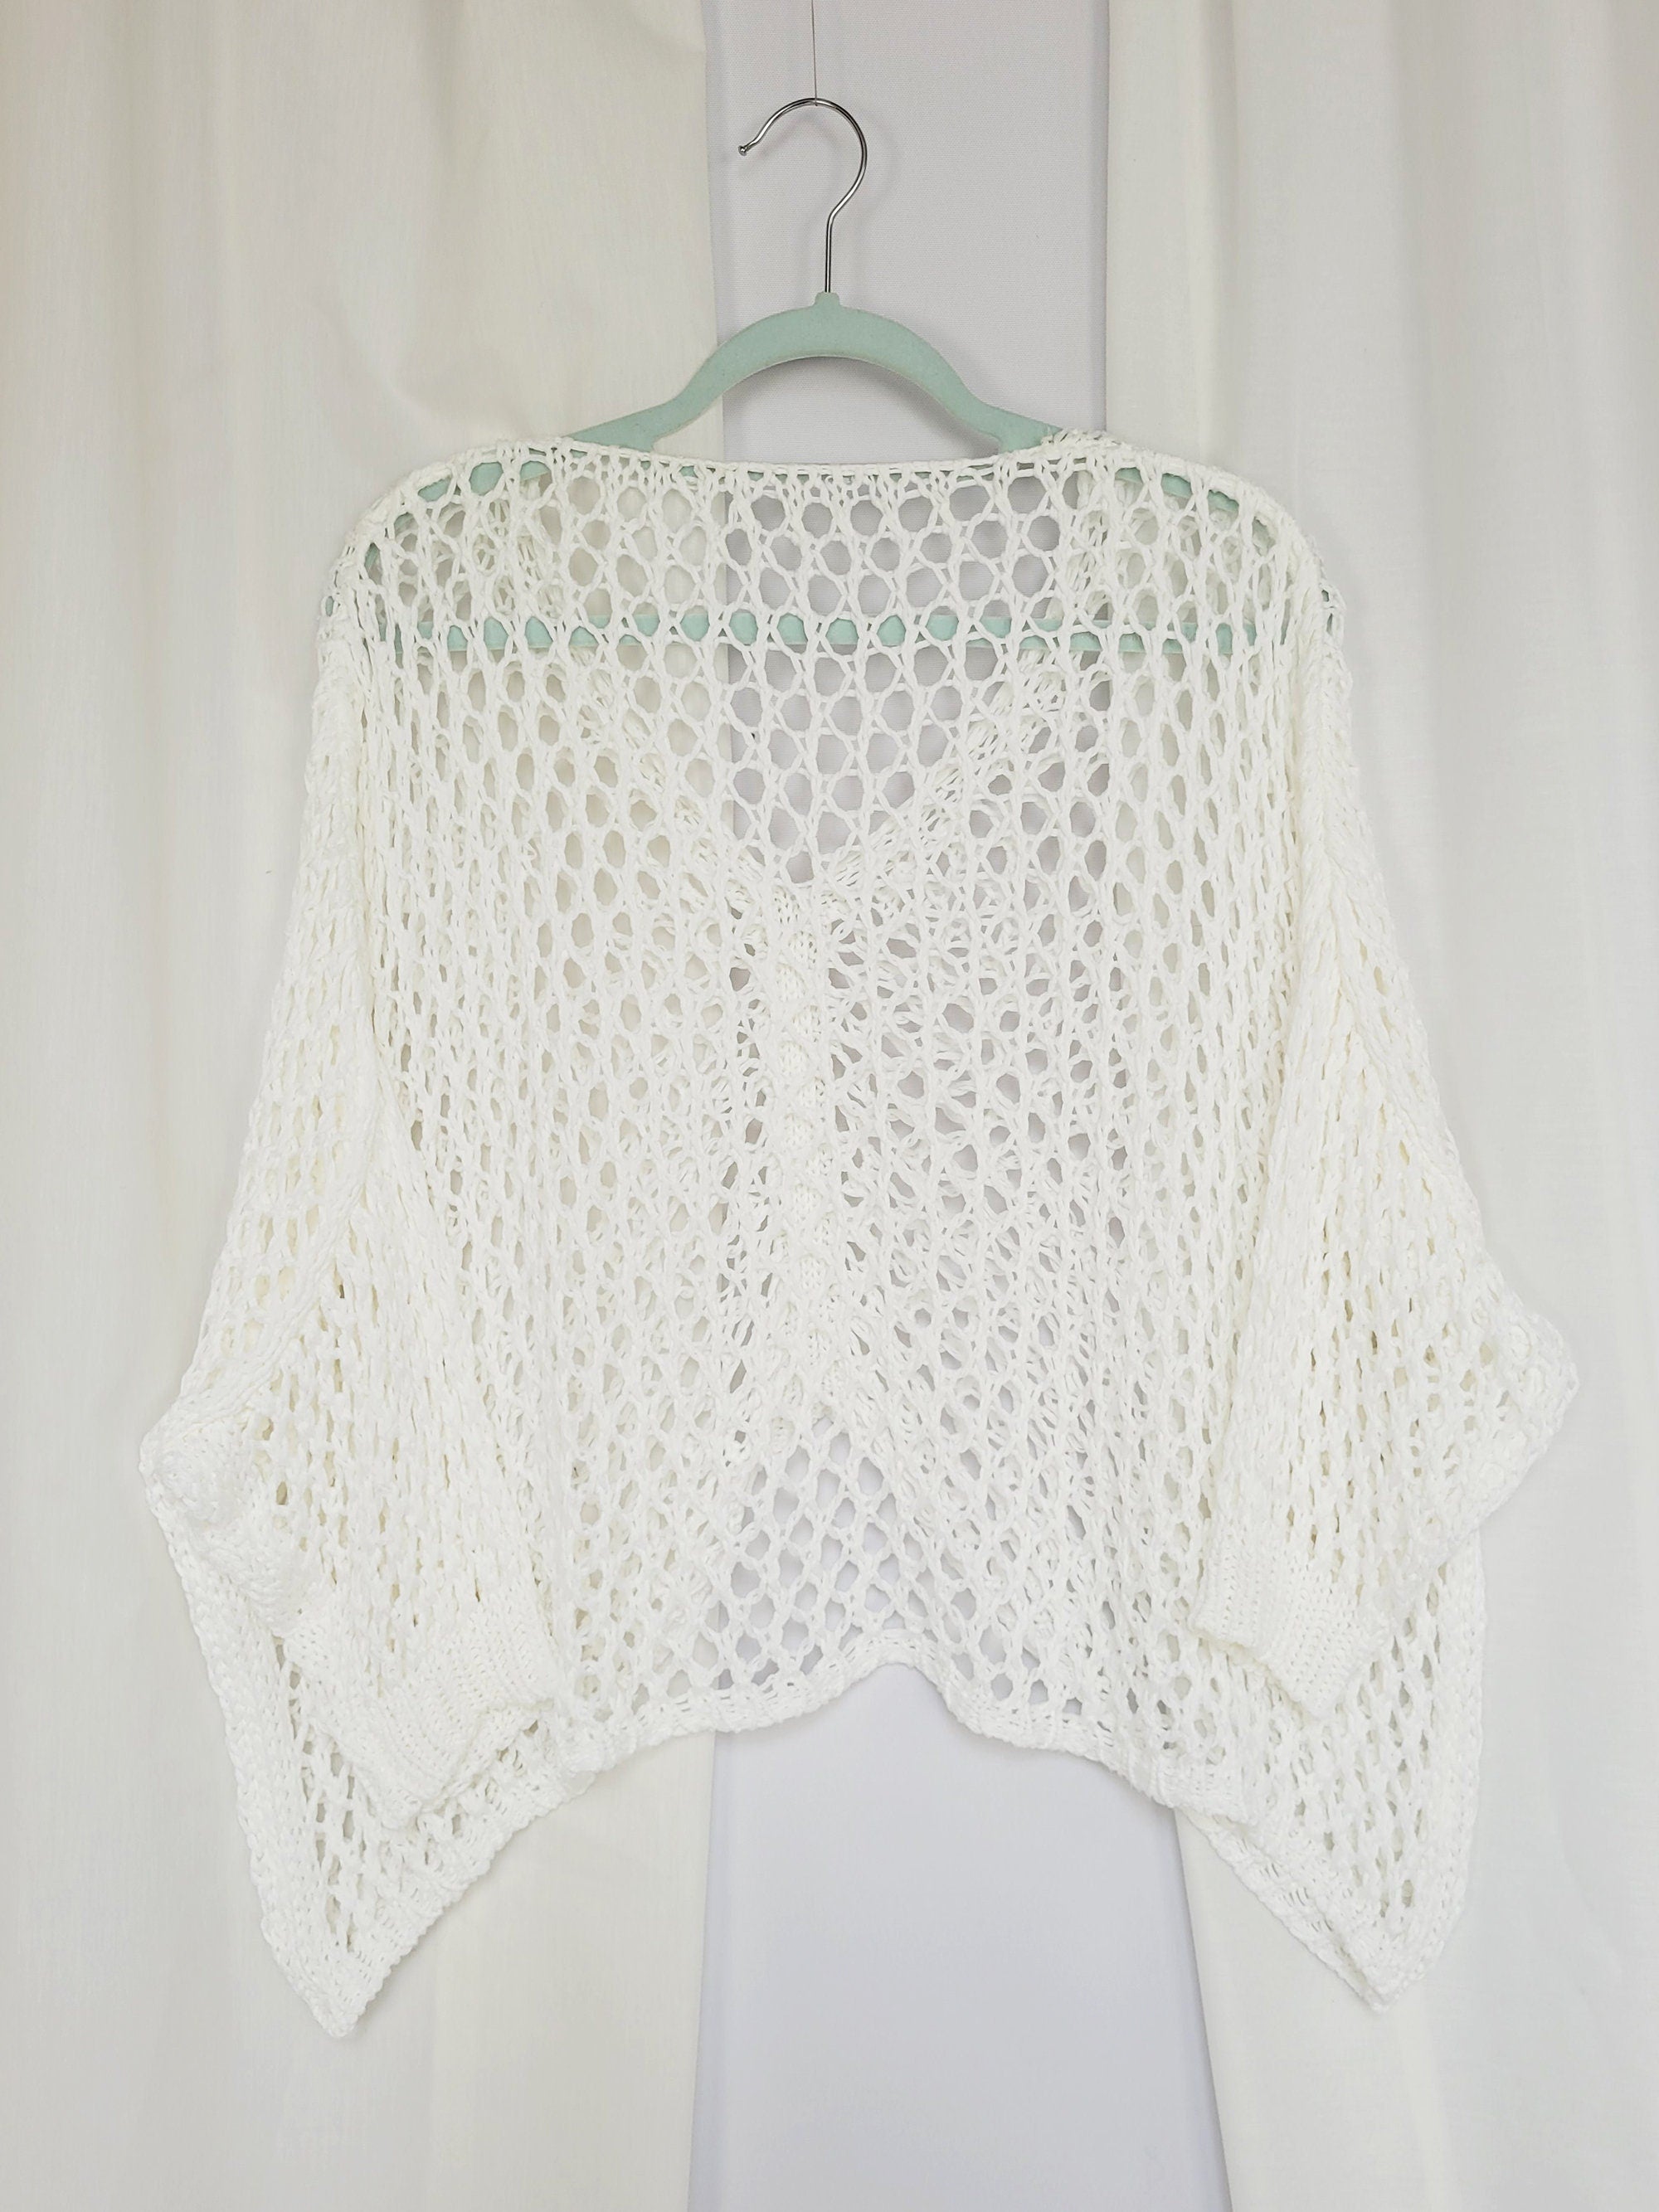 90s handmade white sheer knitted minimalist oversized top